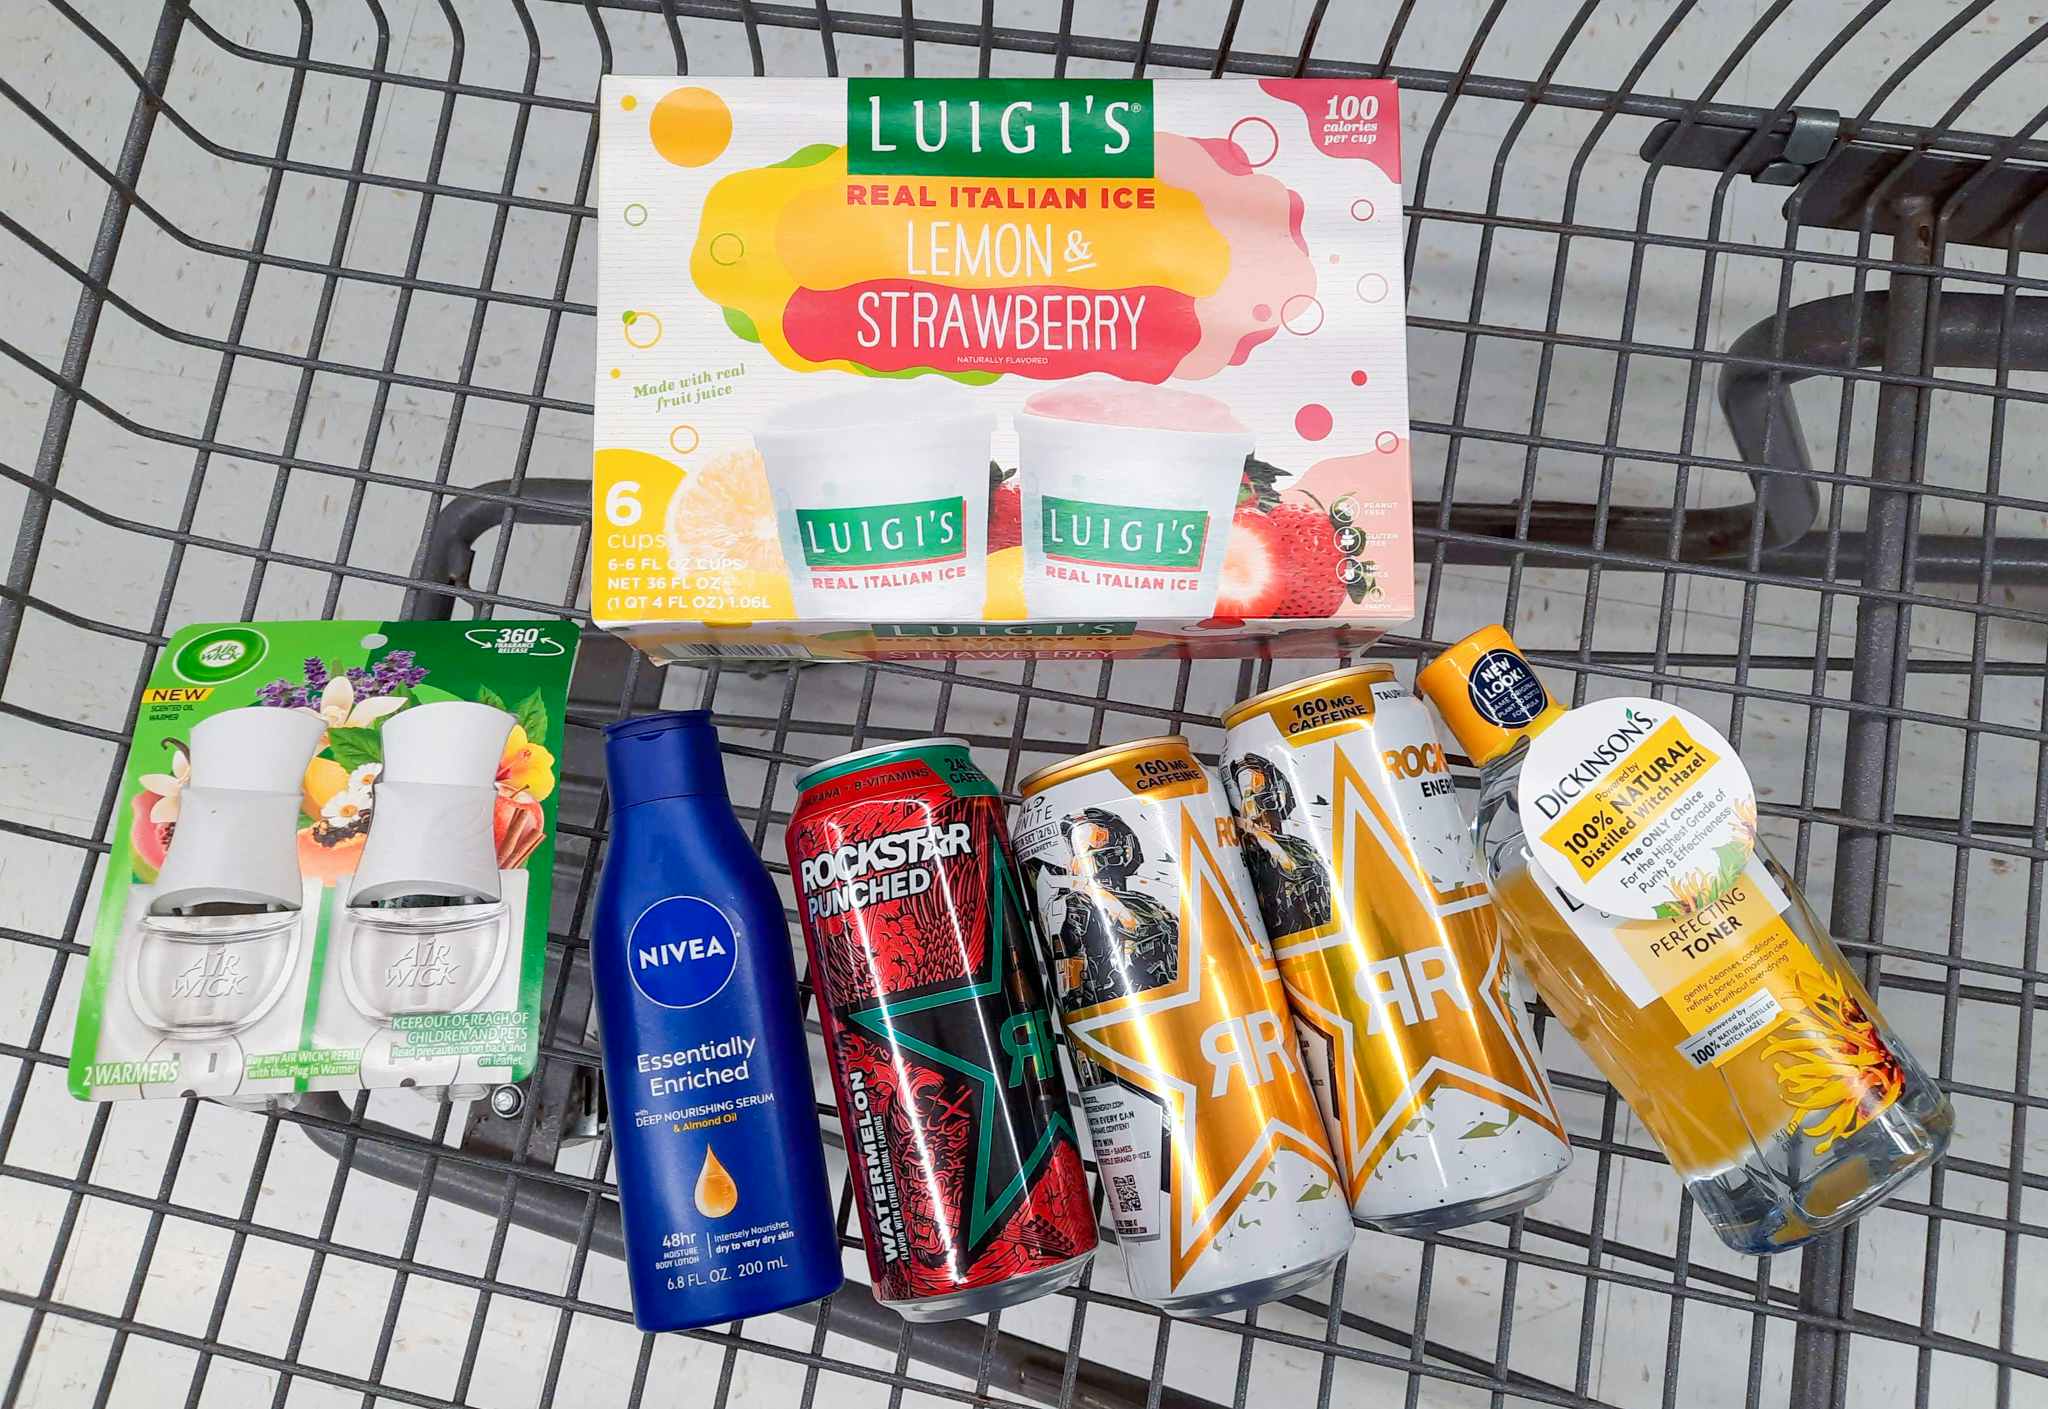 Nivea, Rockstar, Dickinson's, Luigi's, and Air Wick products in Walmart shopping cart